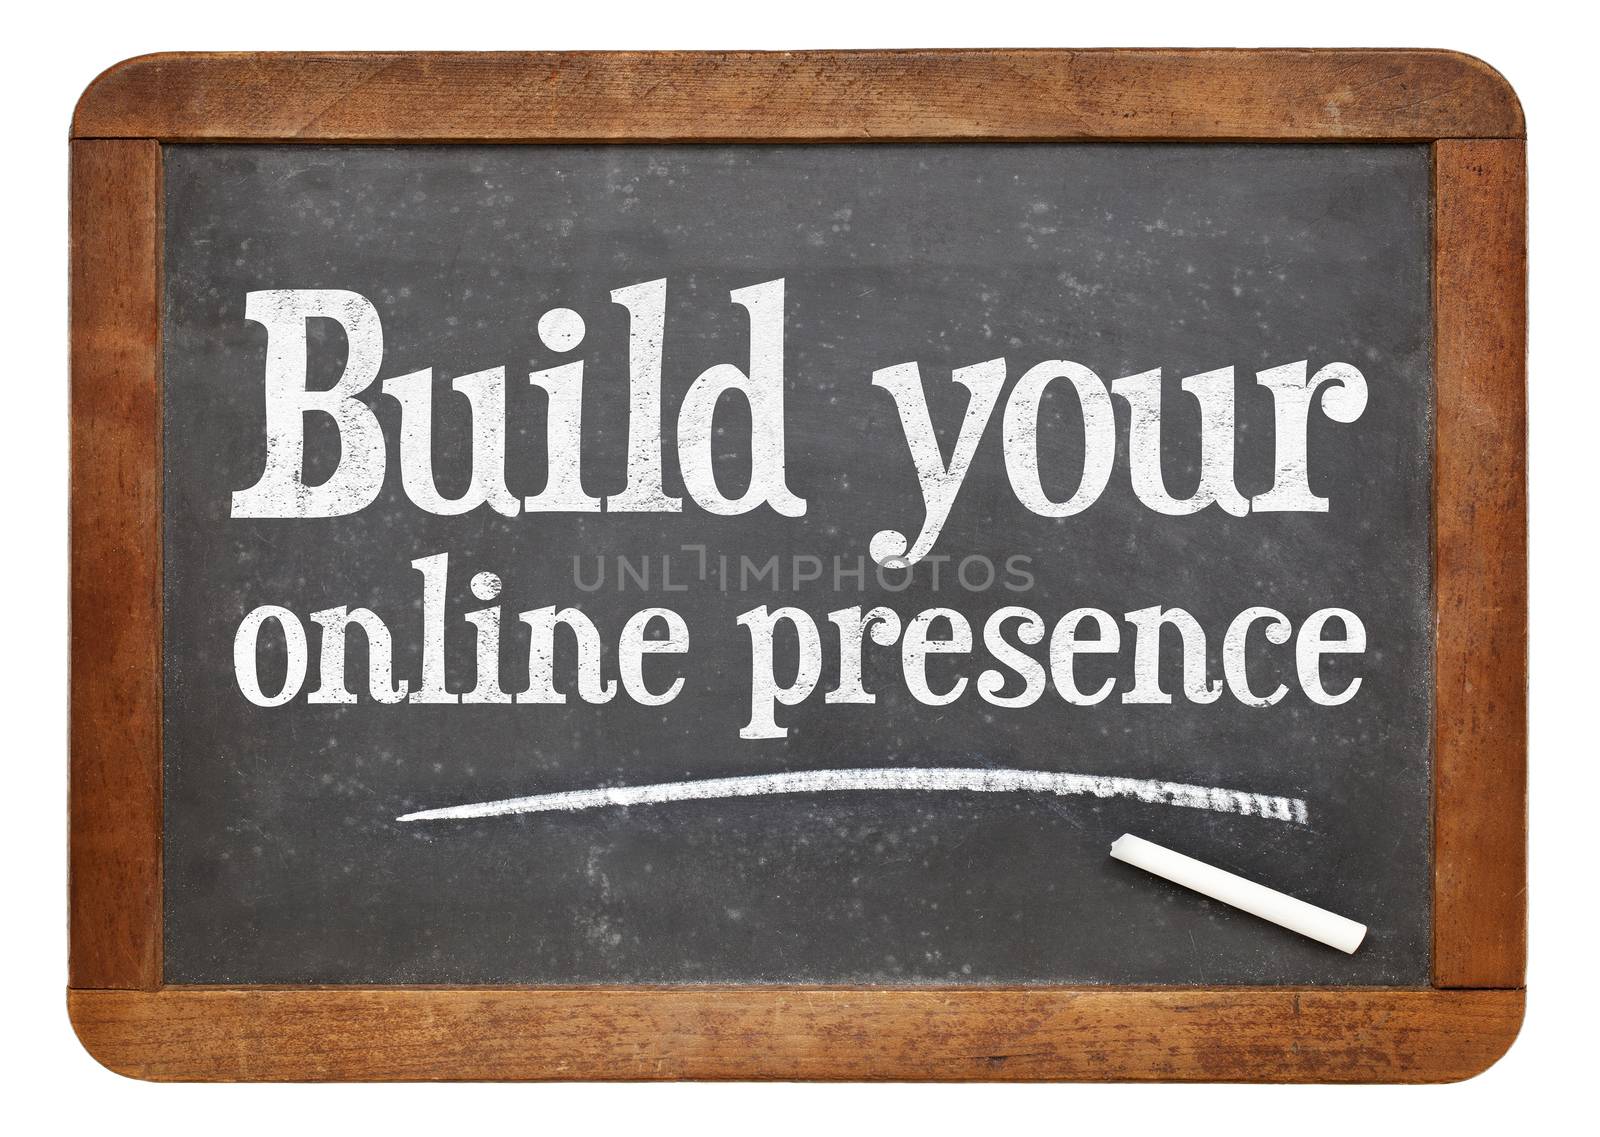 Build your online presence - internet marketing concept -  a text on a vintage slate blackboard